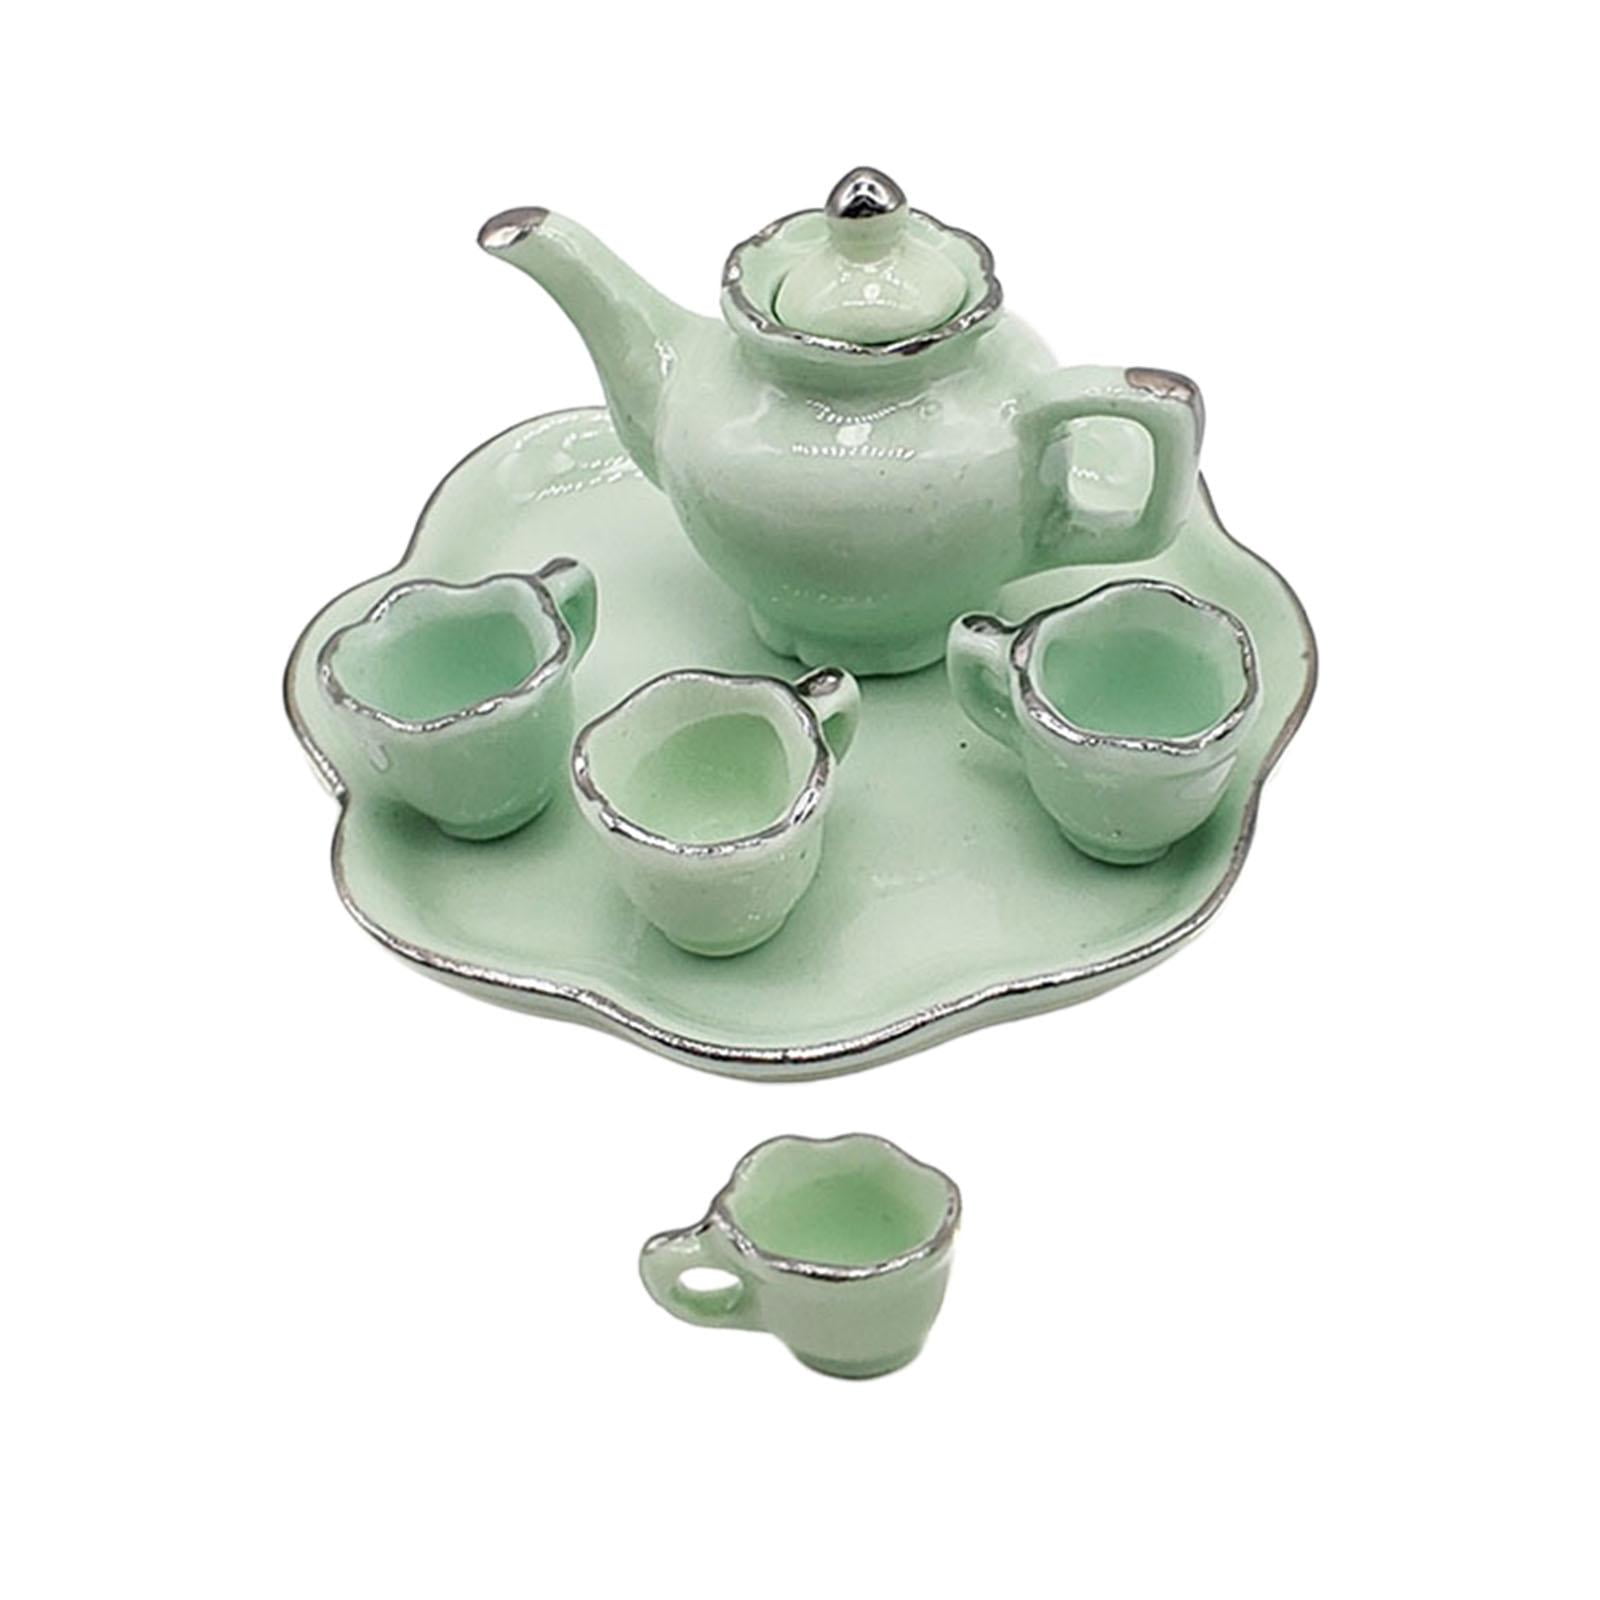 Dolls House Miniature Handmade Green Ceramic Teapot 